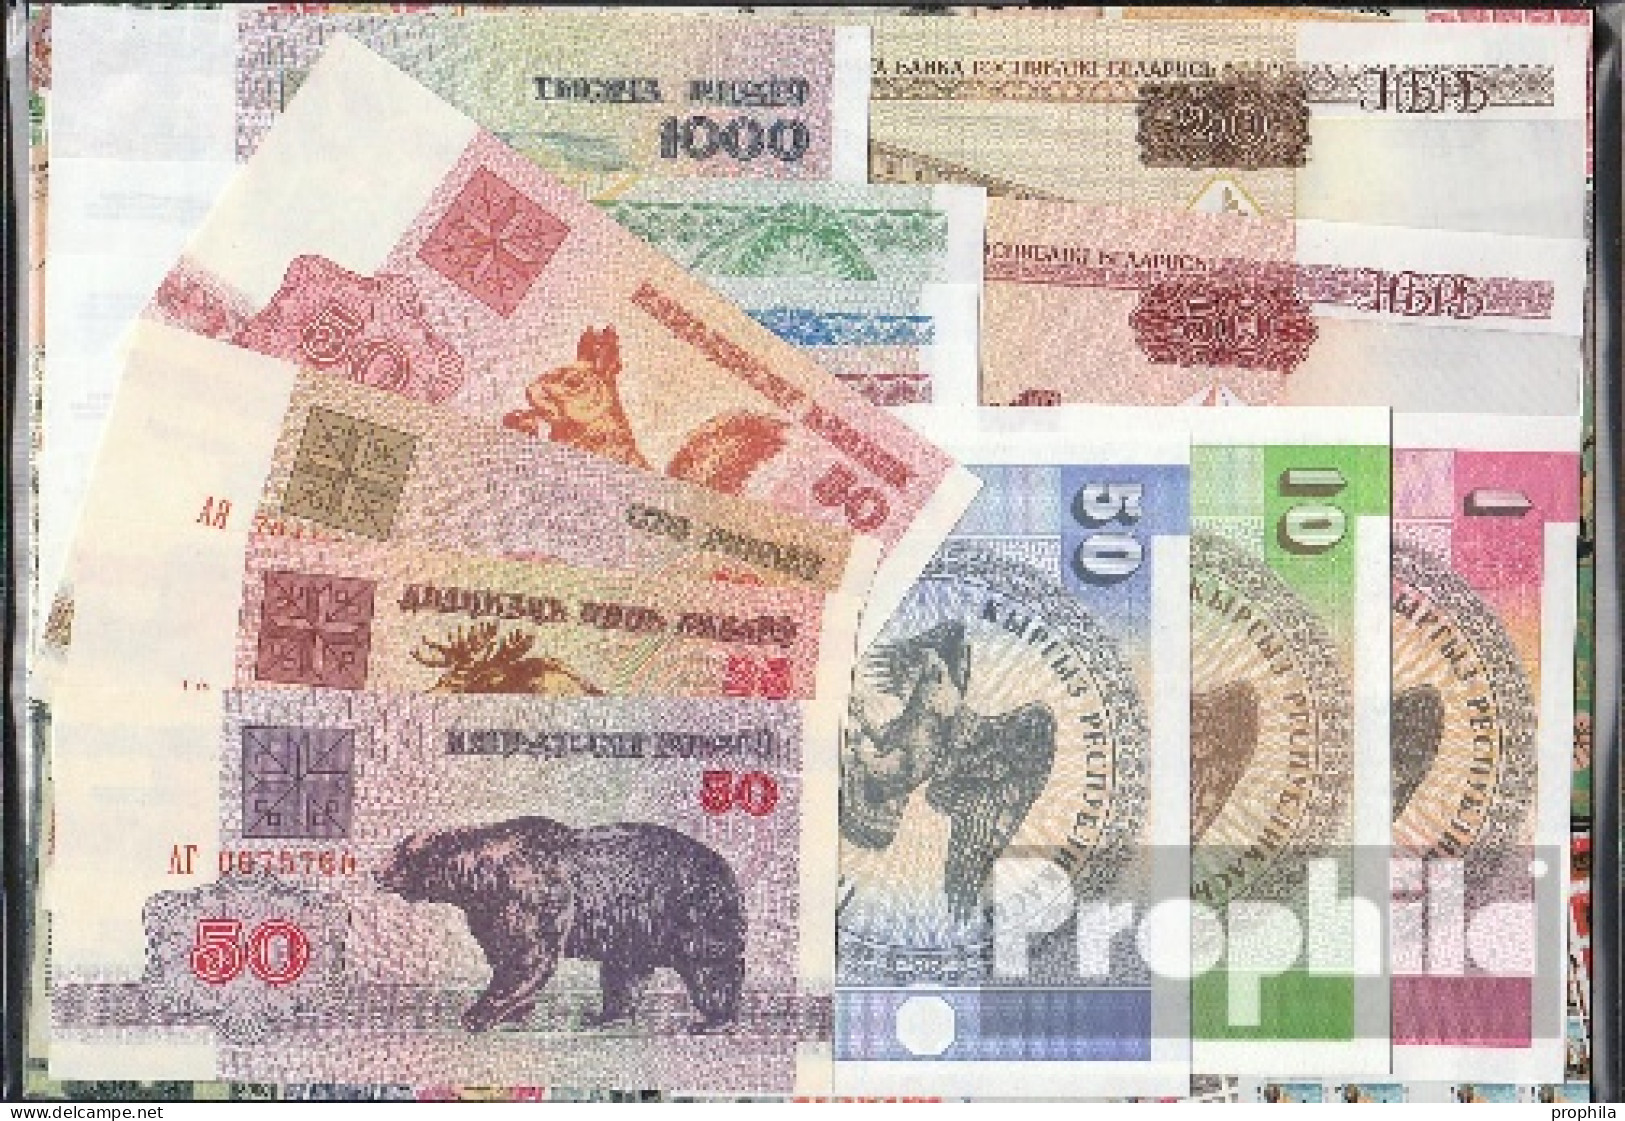 Ehemalige Sowjetunion Banknoten-15 Verschiedene Banknoten - Collections